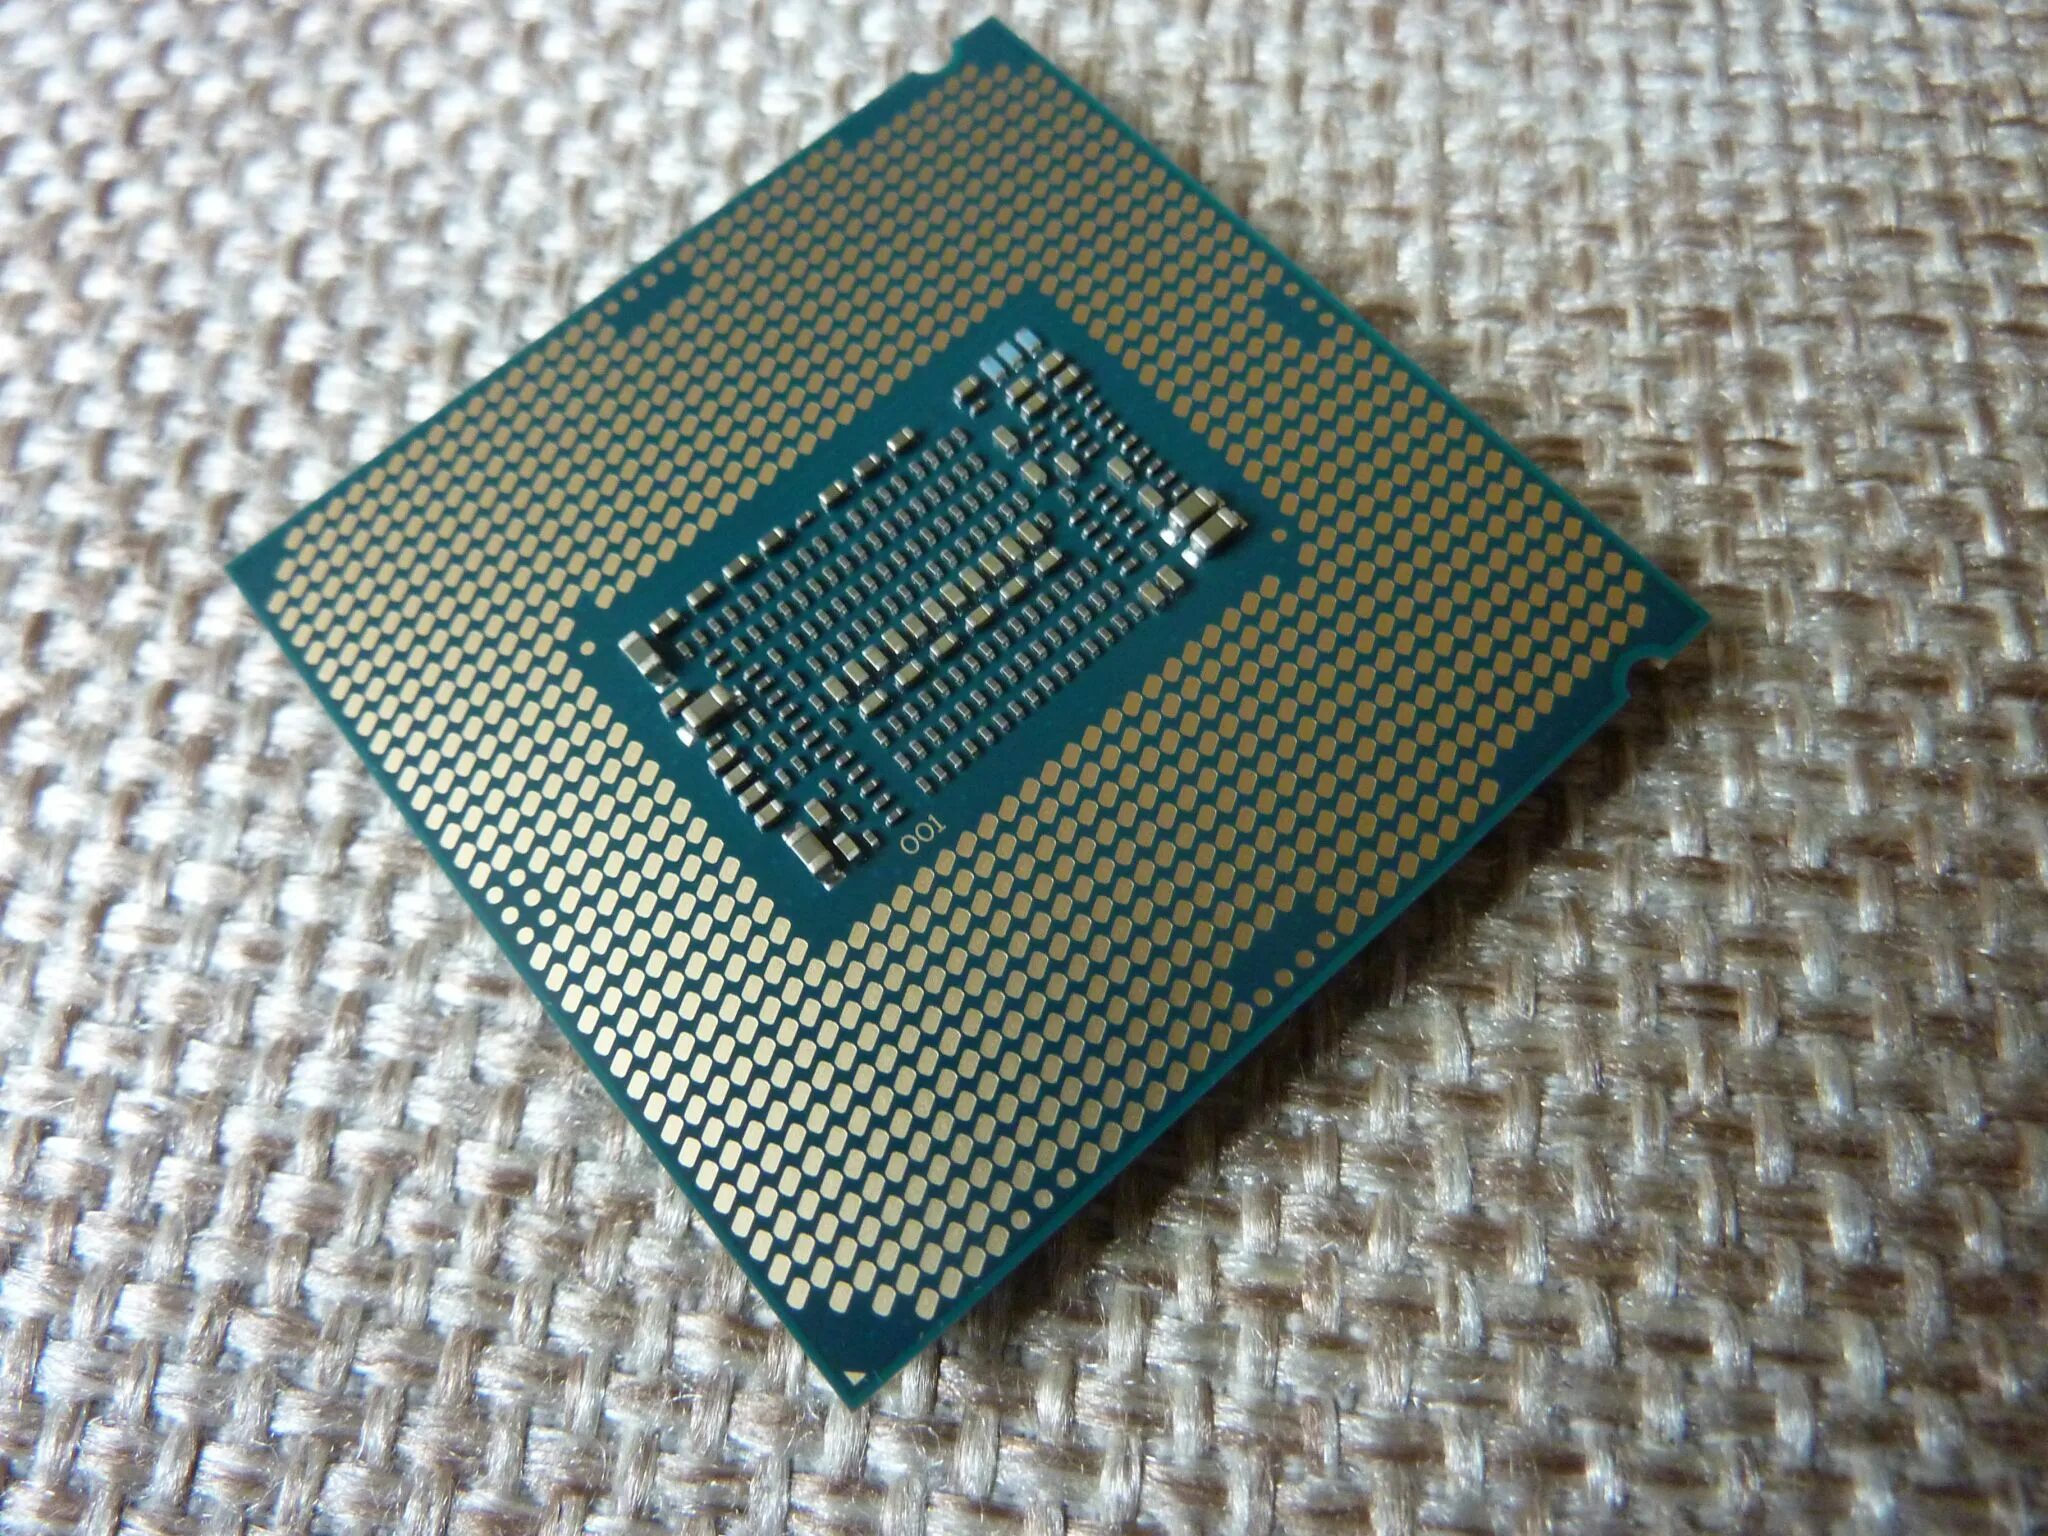 Intel core i5 lga